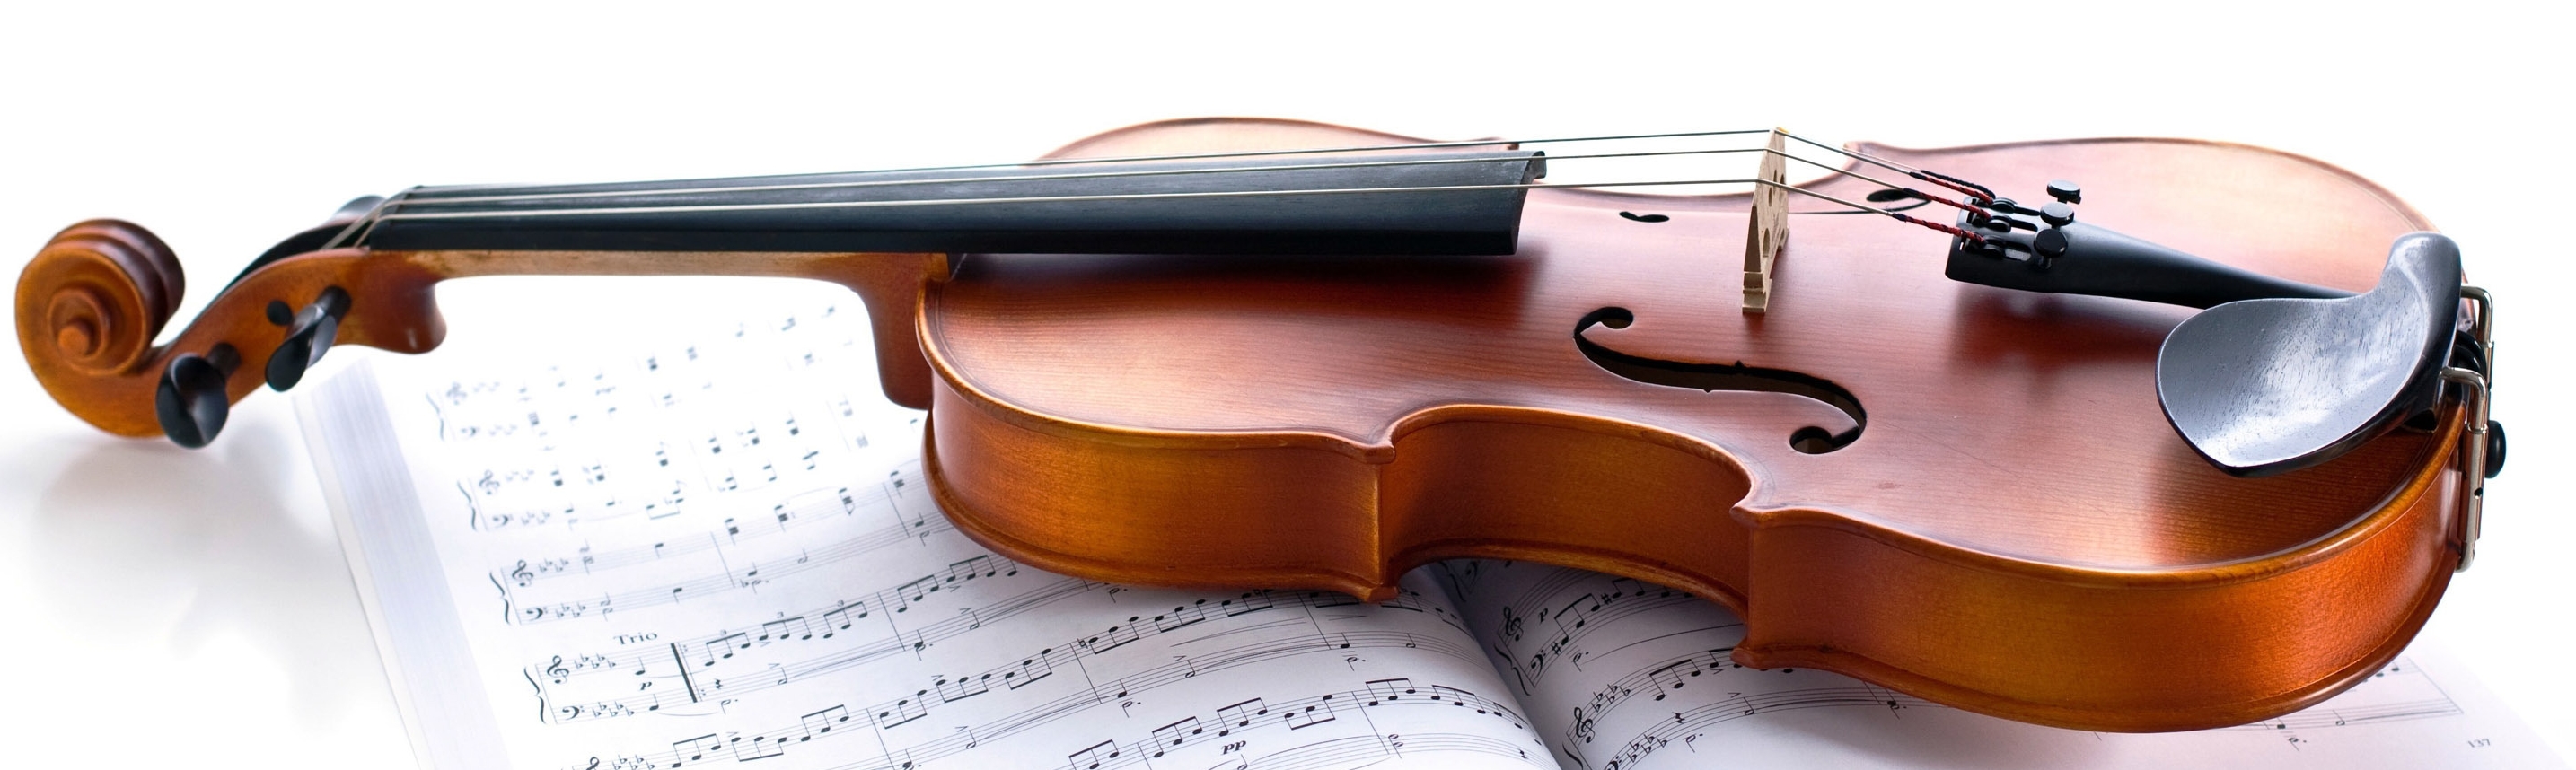 6 Important Tips to Improve Violin Skills